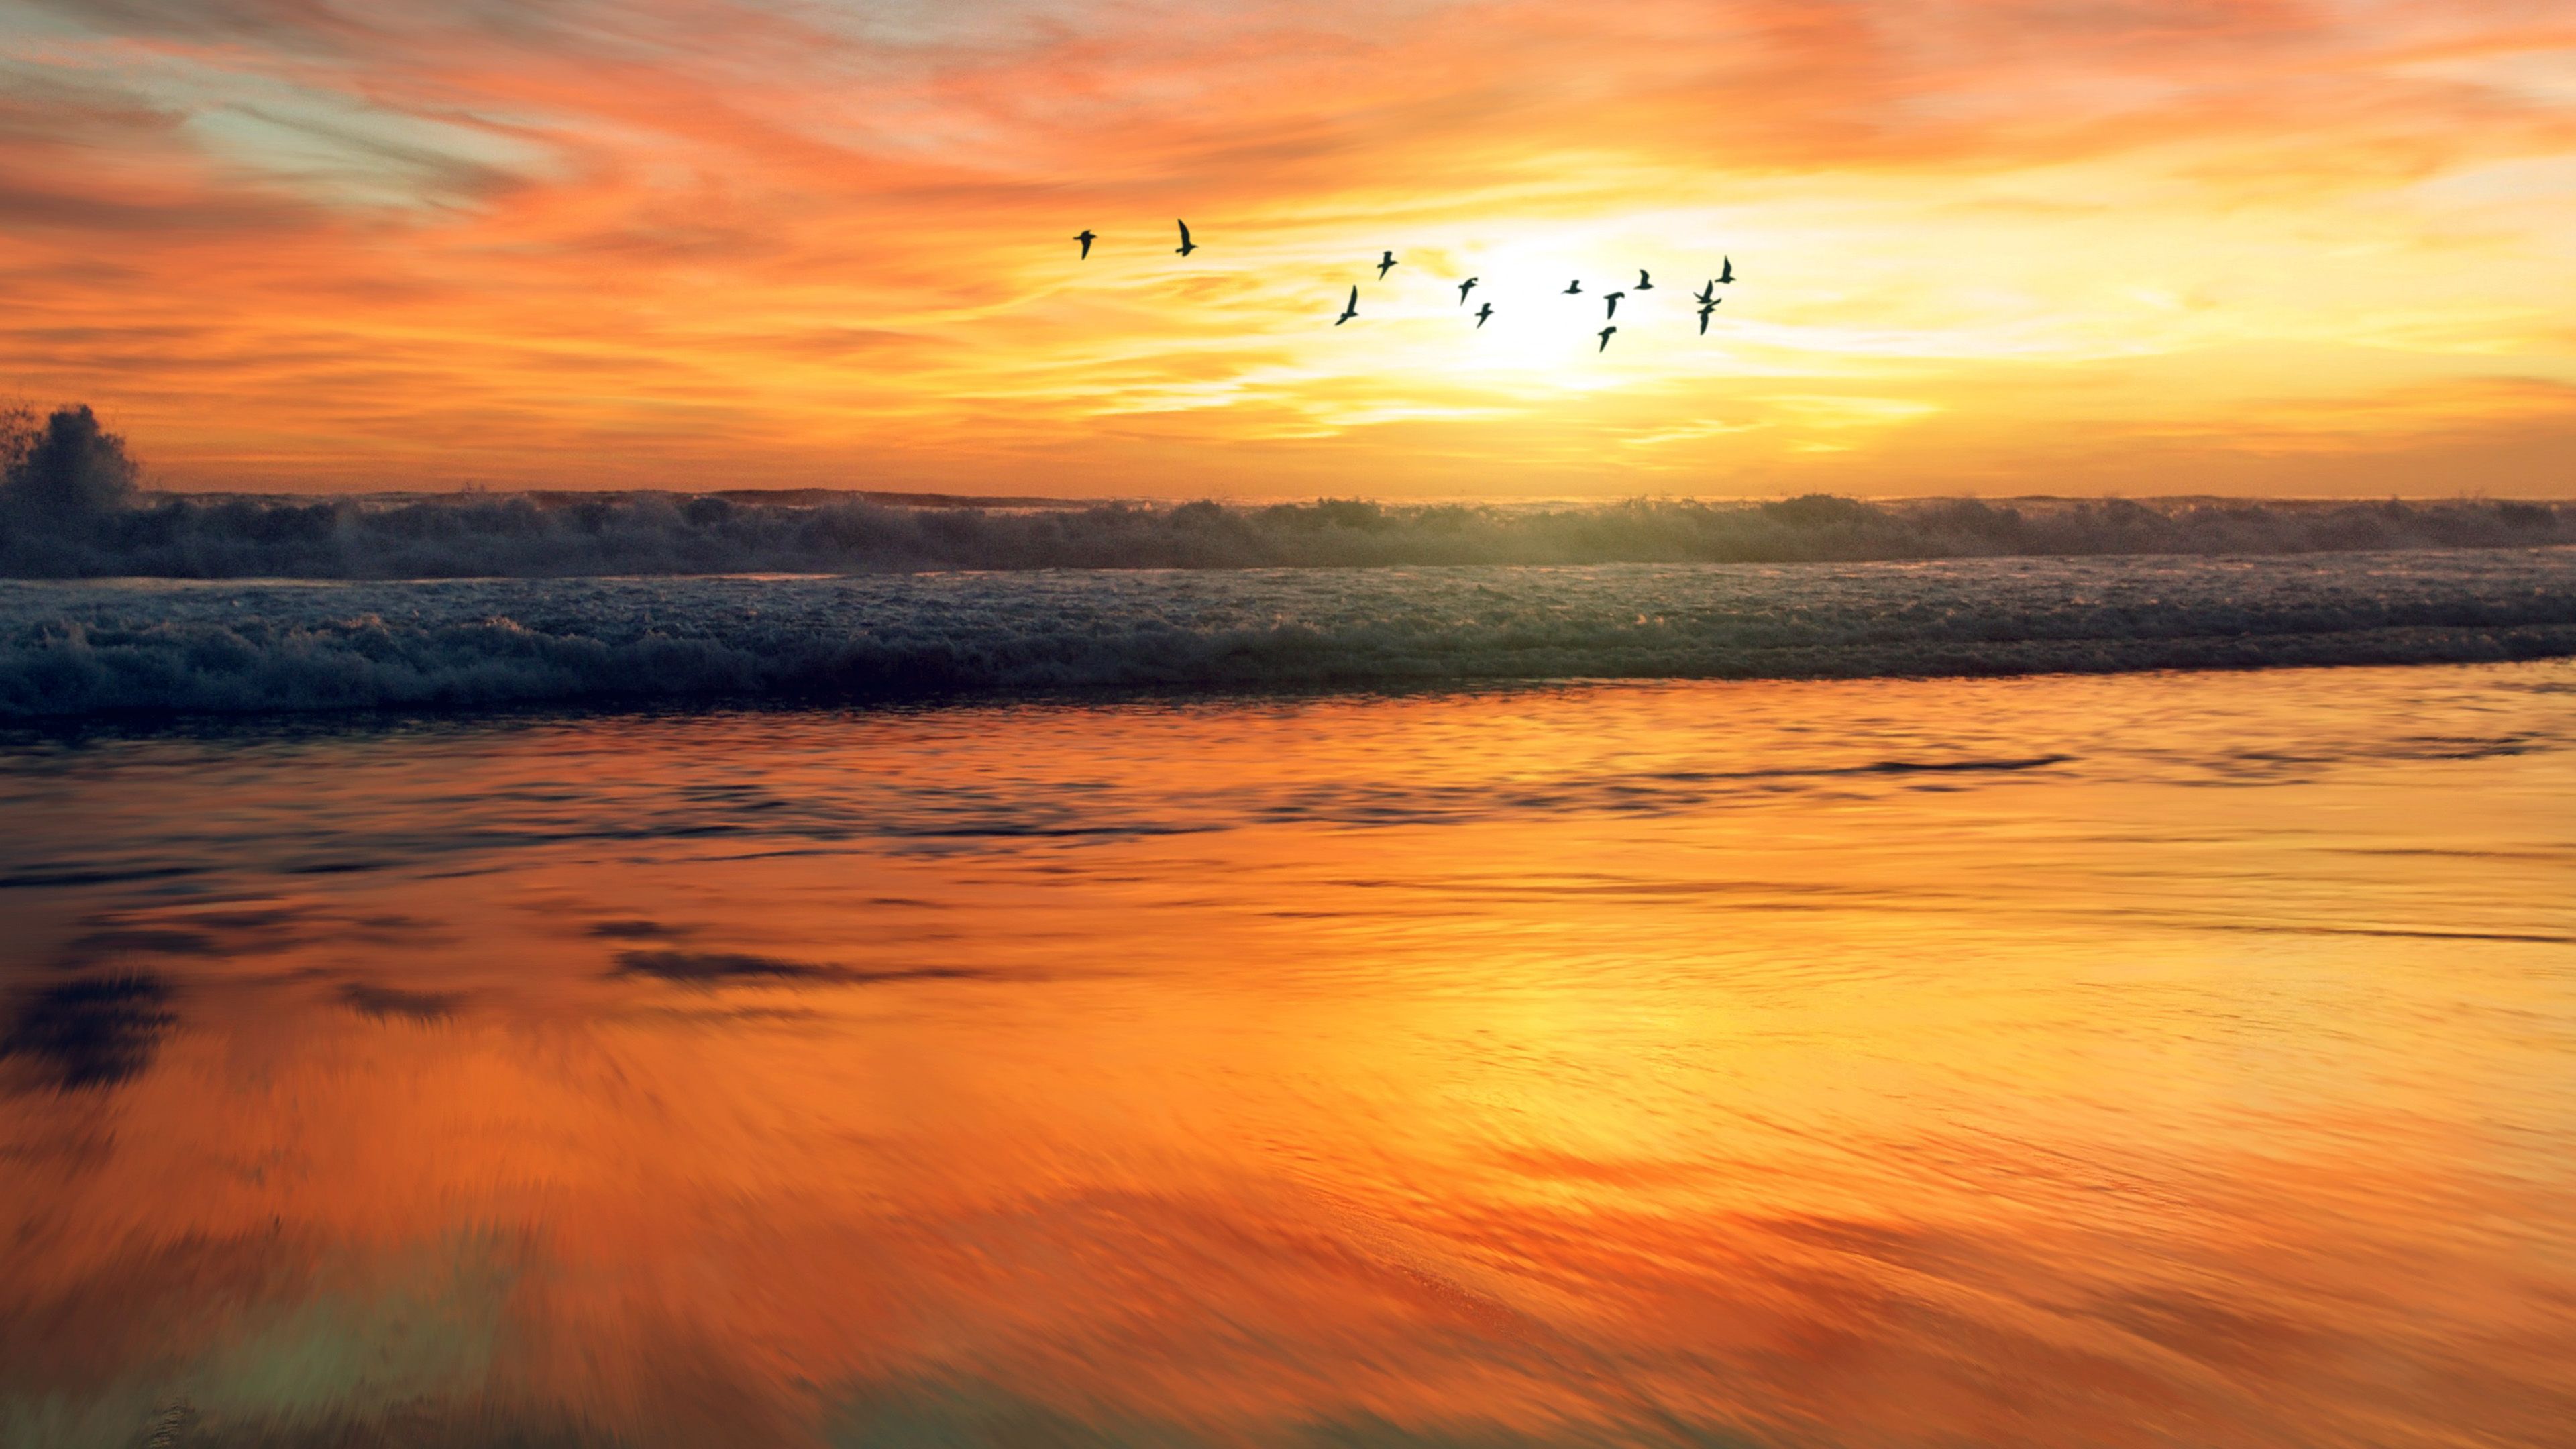 wallpaper for desktop, laptop. sunset sea nature orange summer sky bird animal